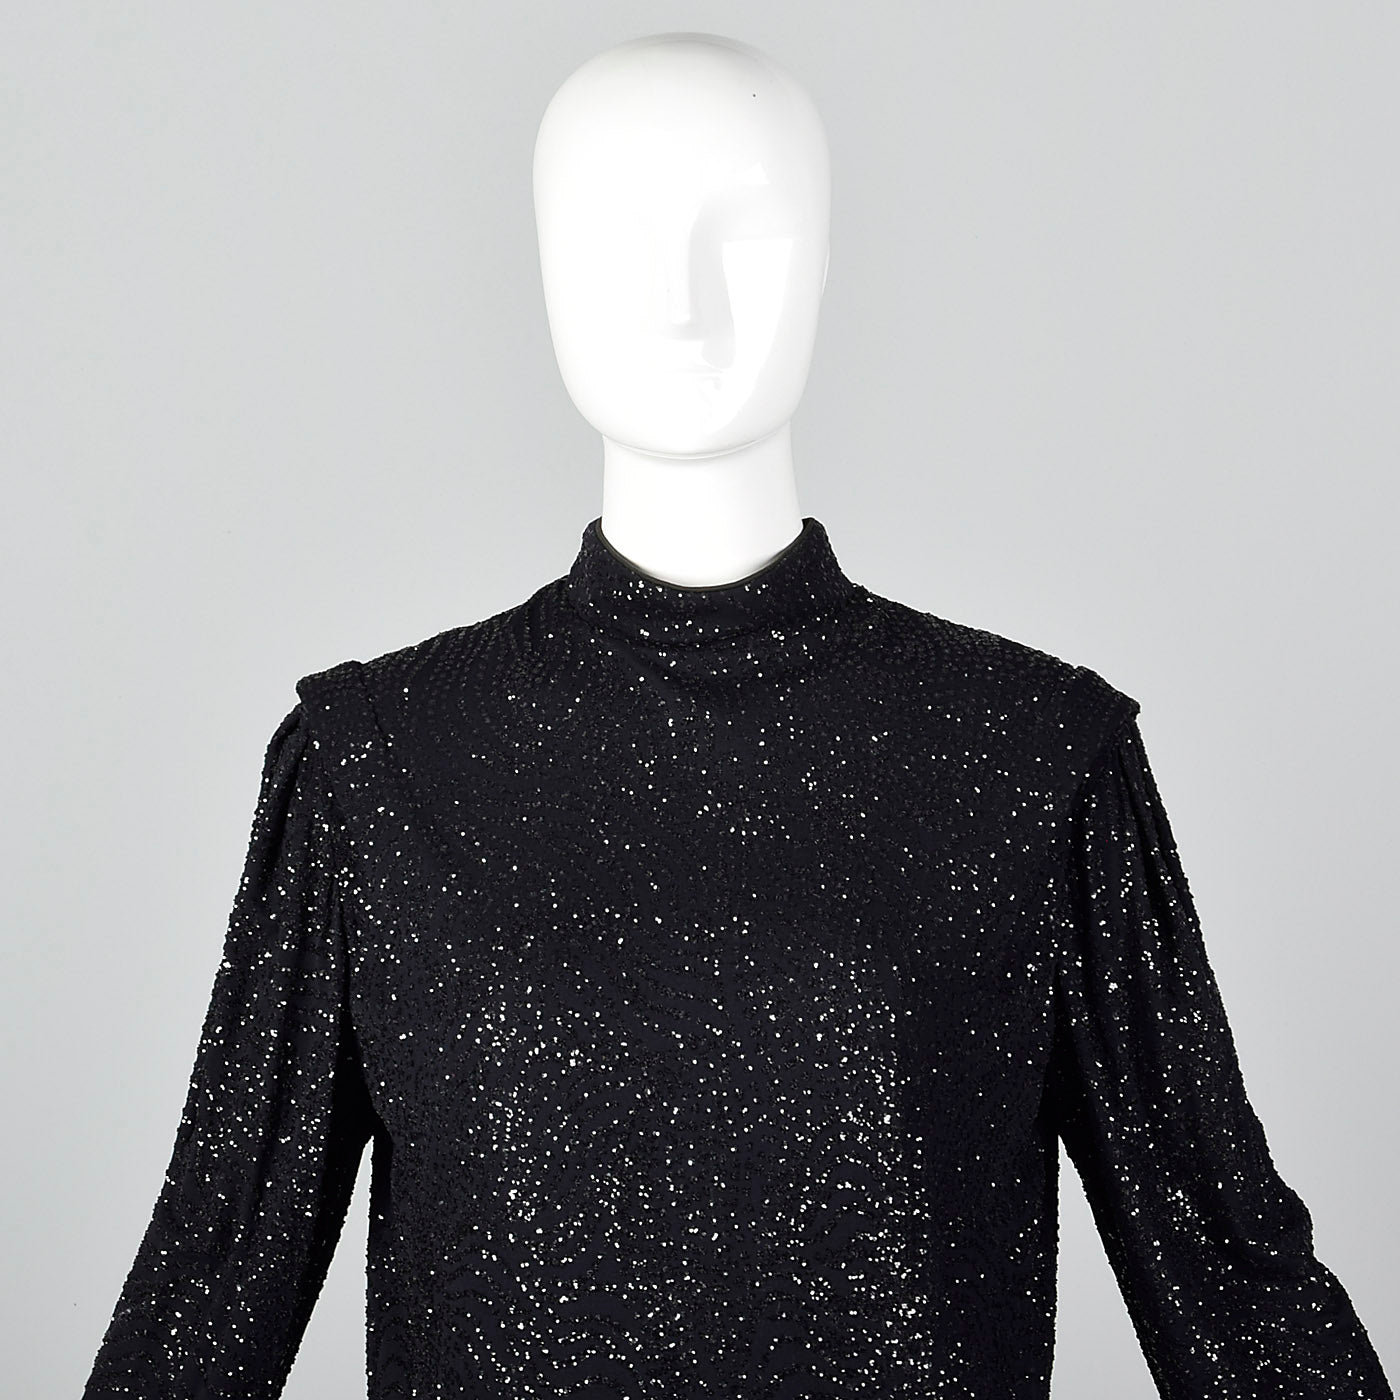 1980s Black Glitter Sack Dress